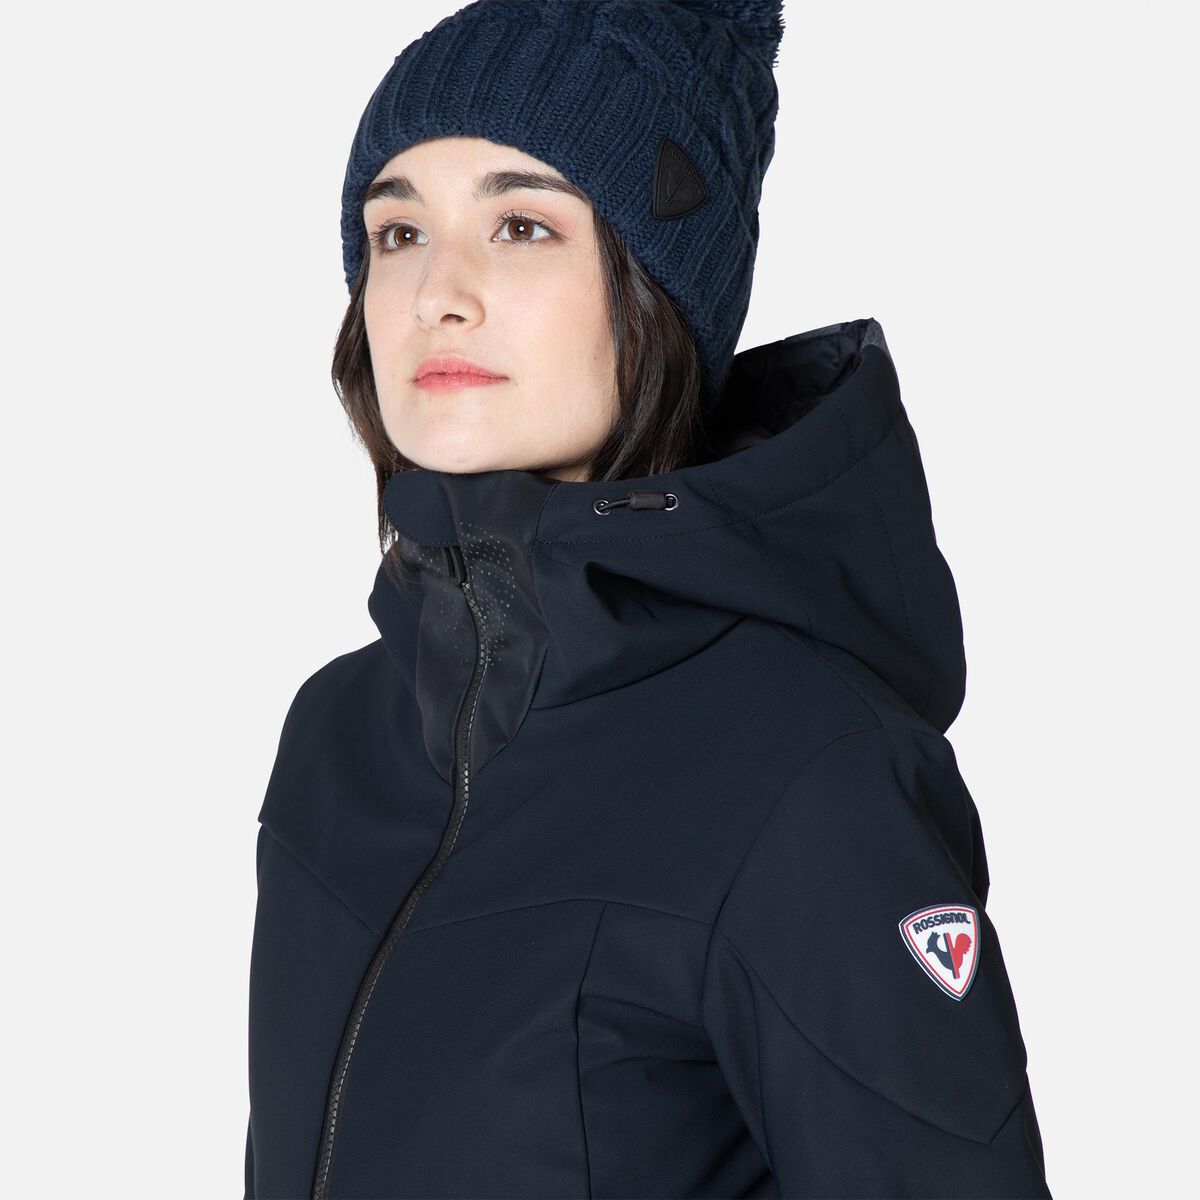 Rossignol Women's Versatile Ski Jacket black